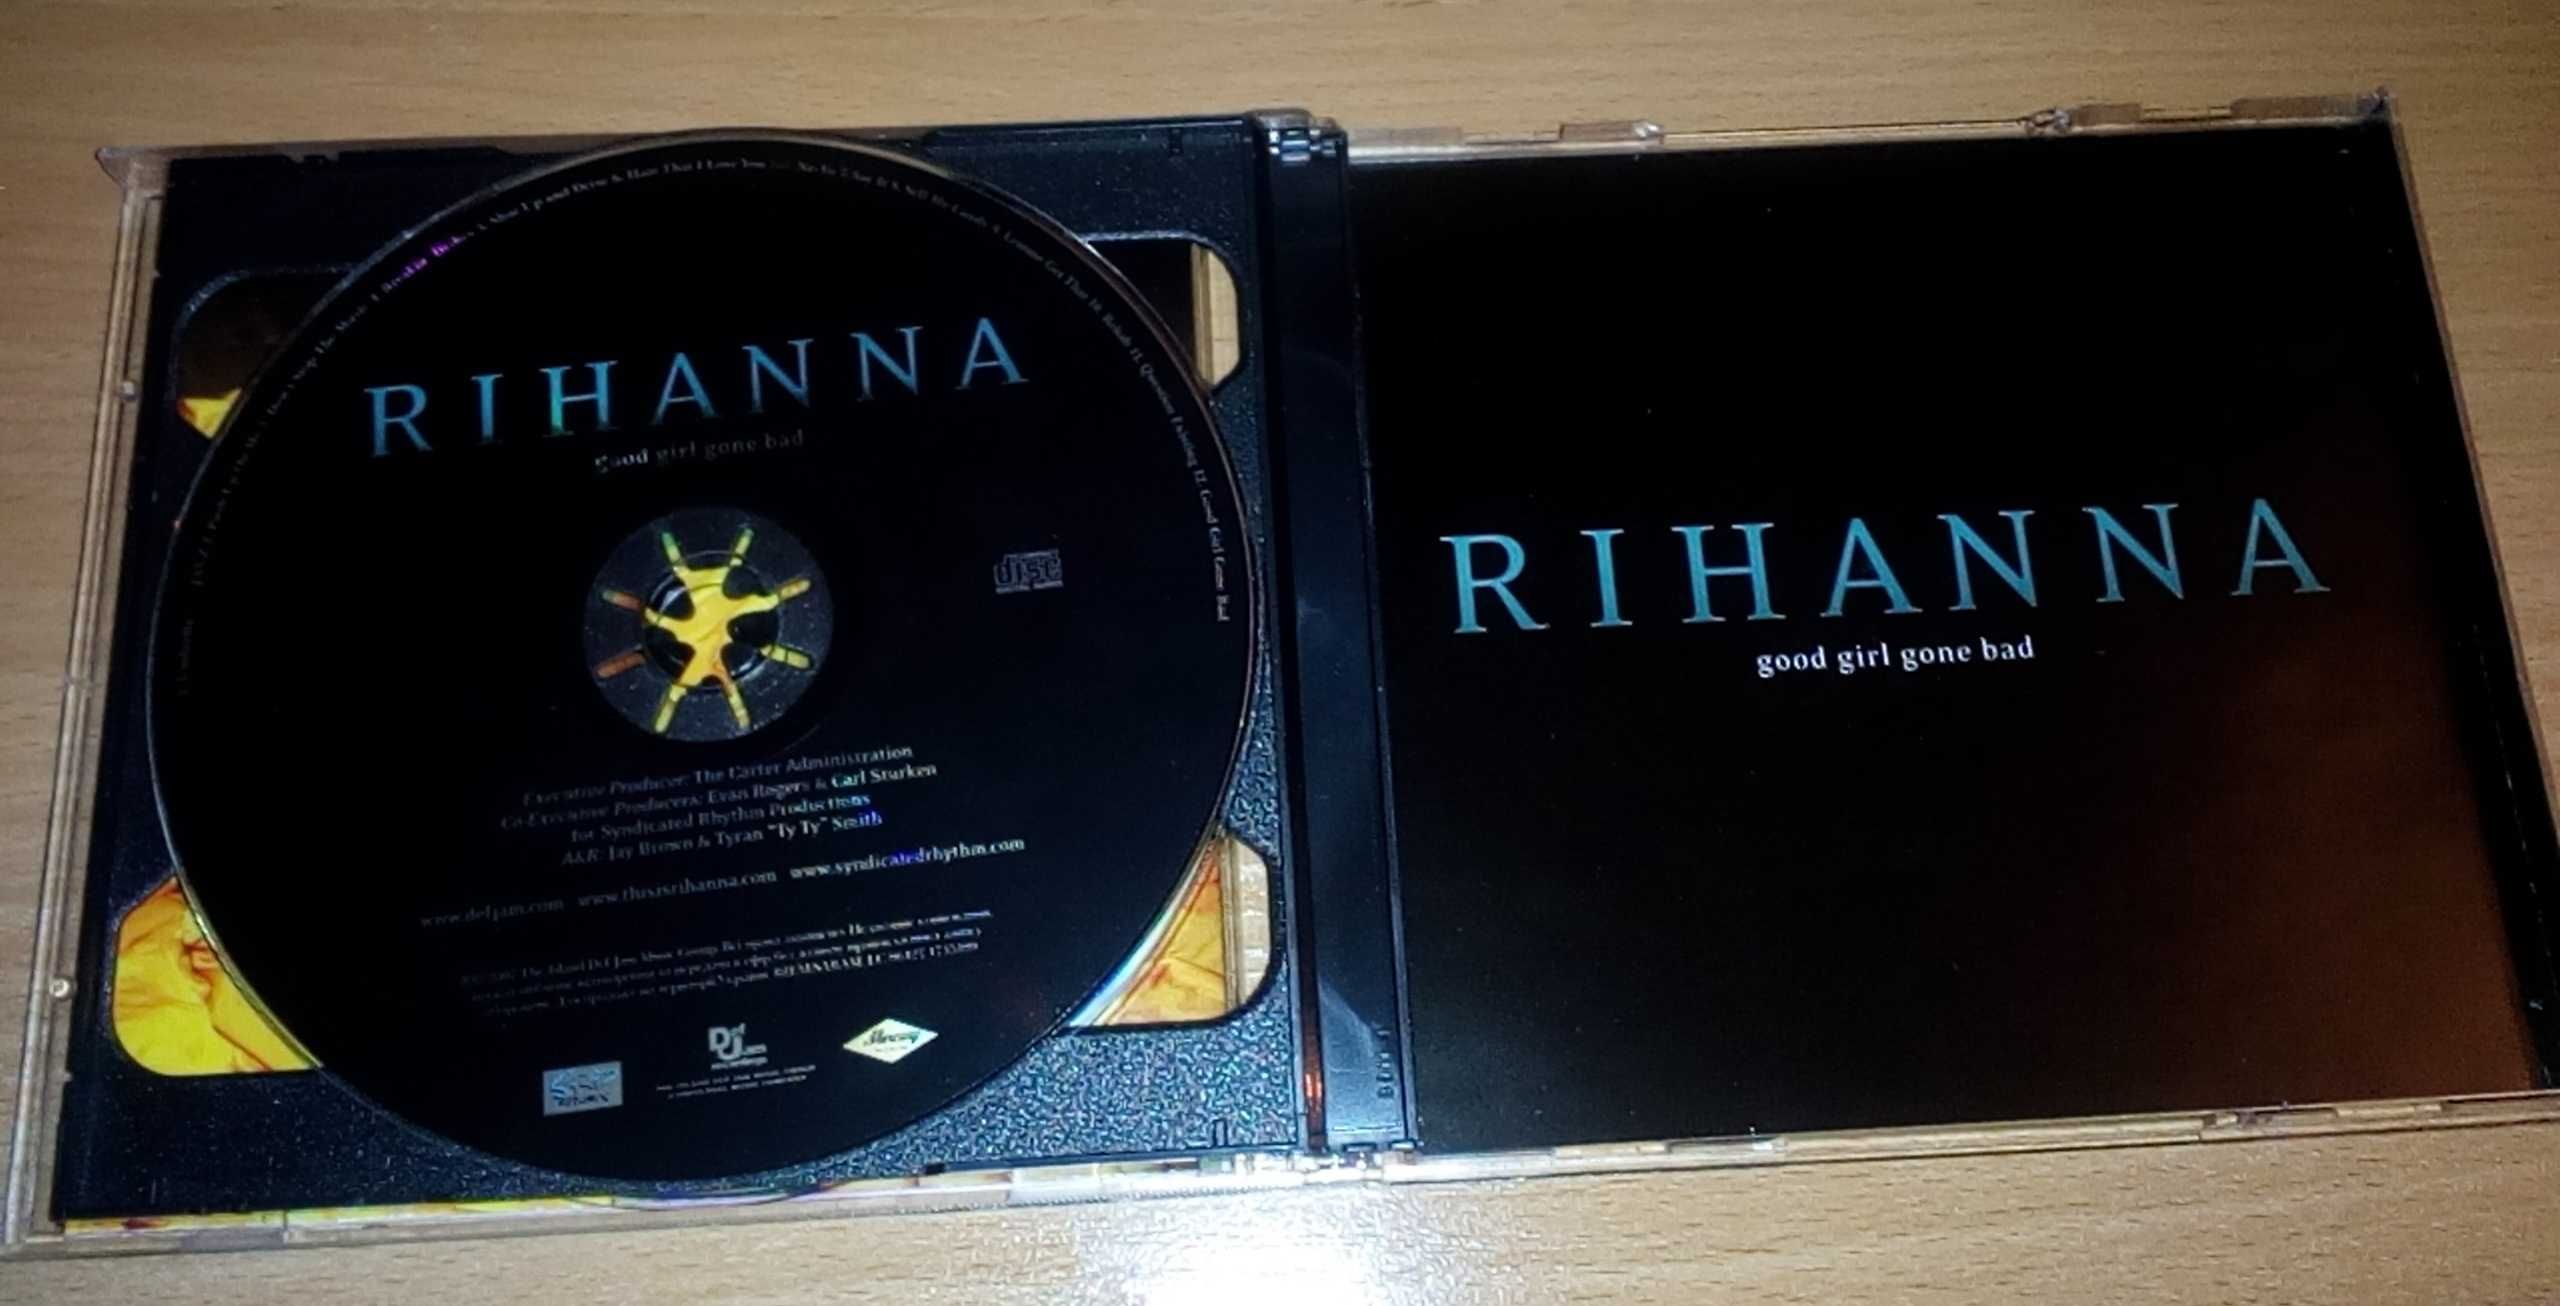 Rihanna - Good girl gone bad 2xCD